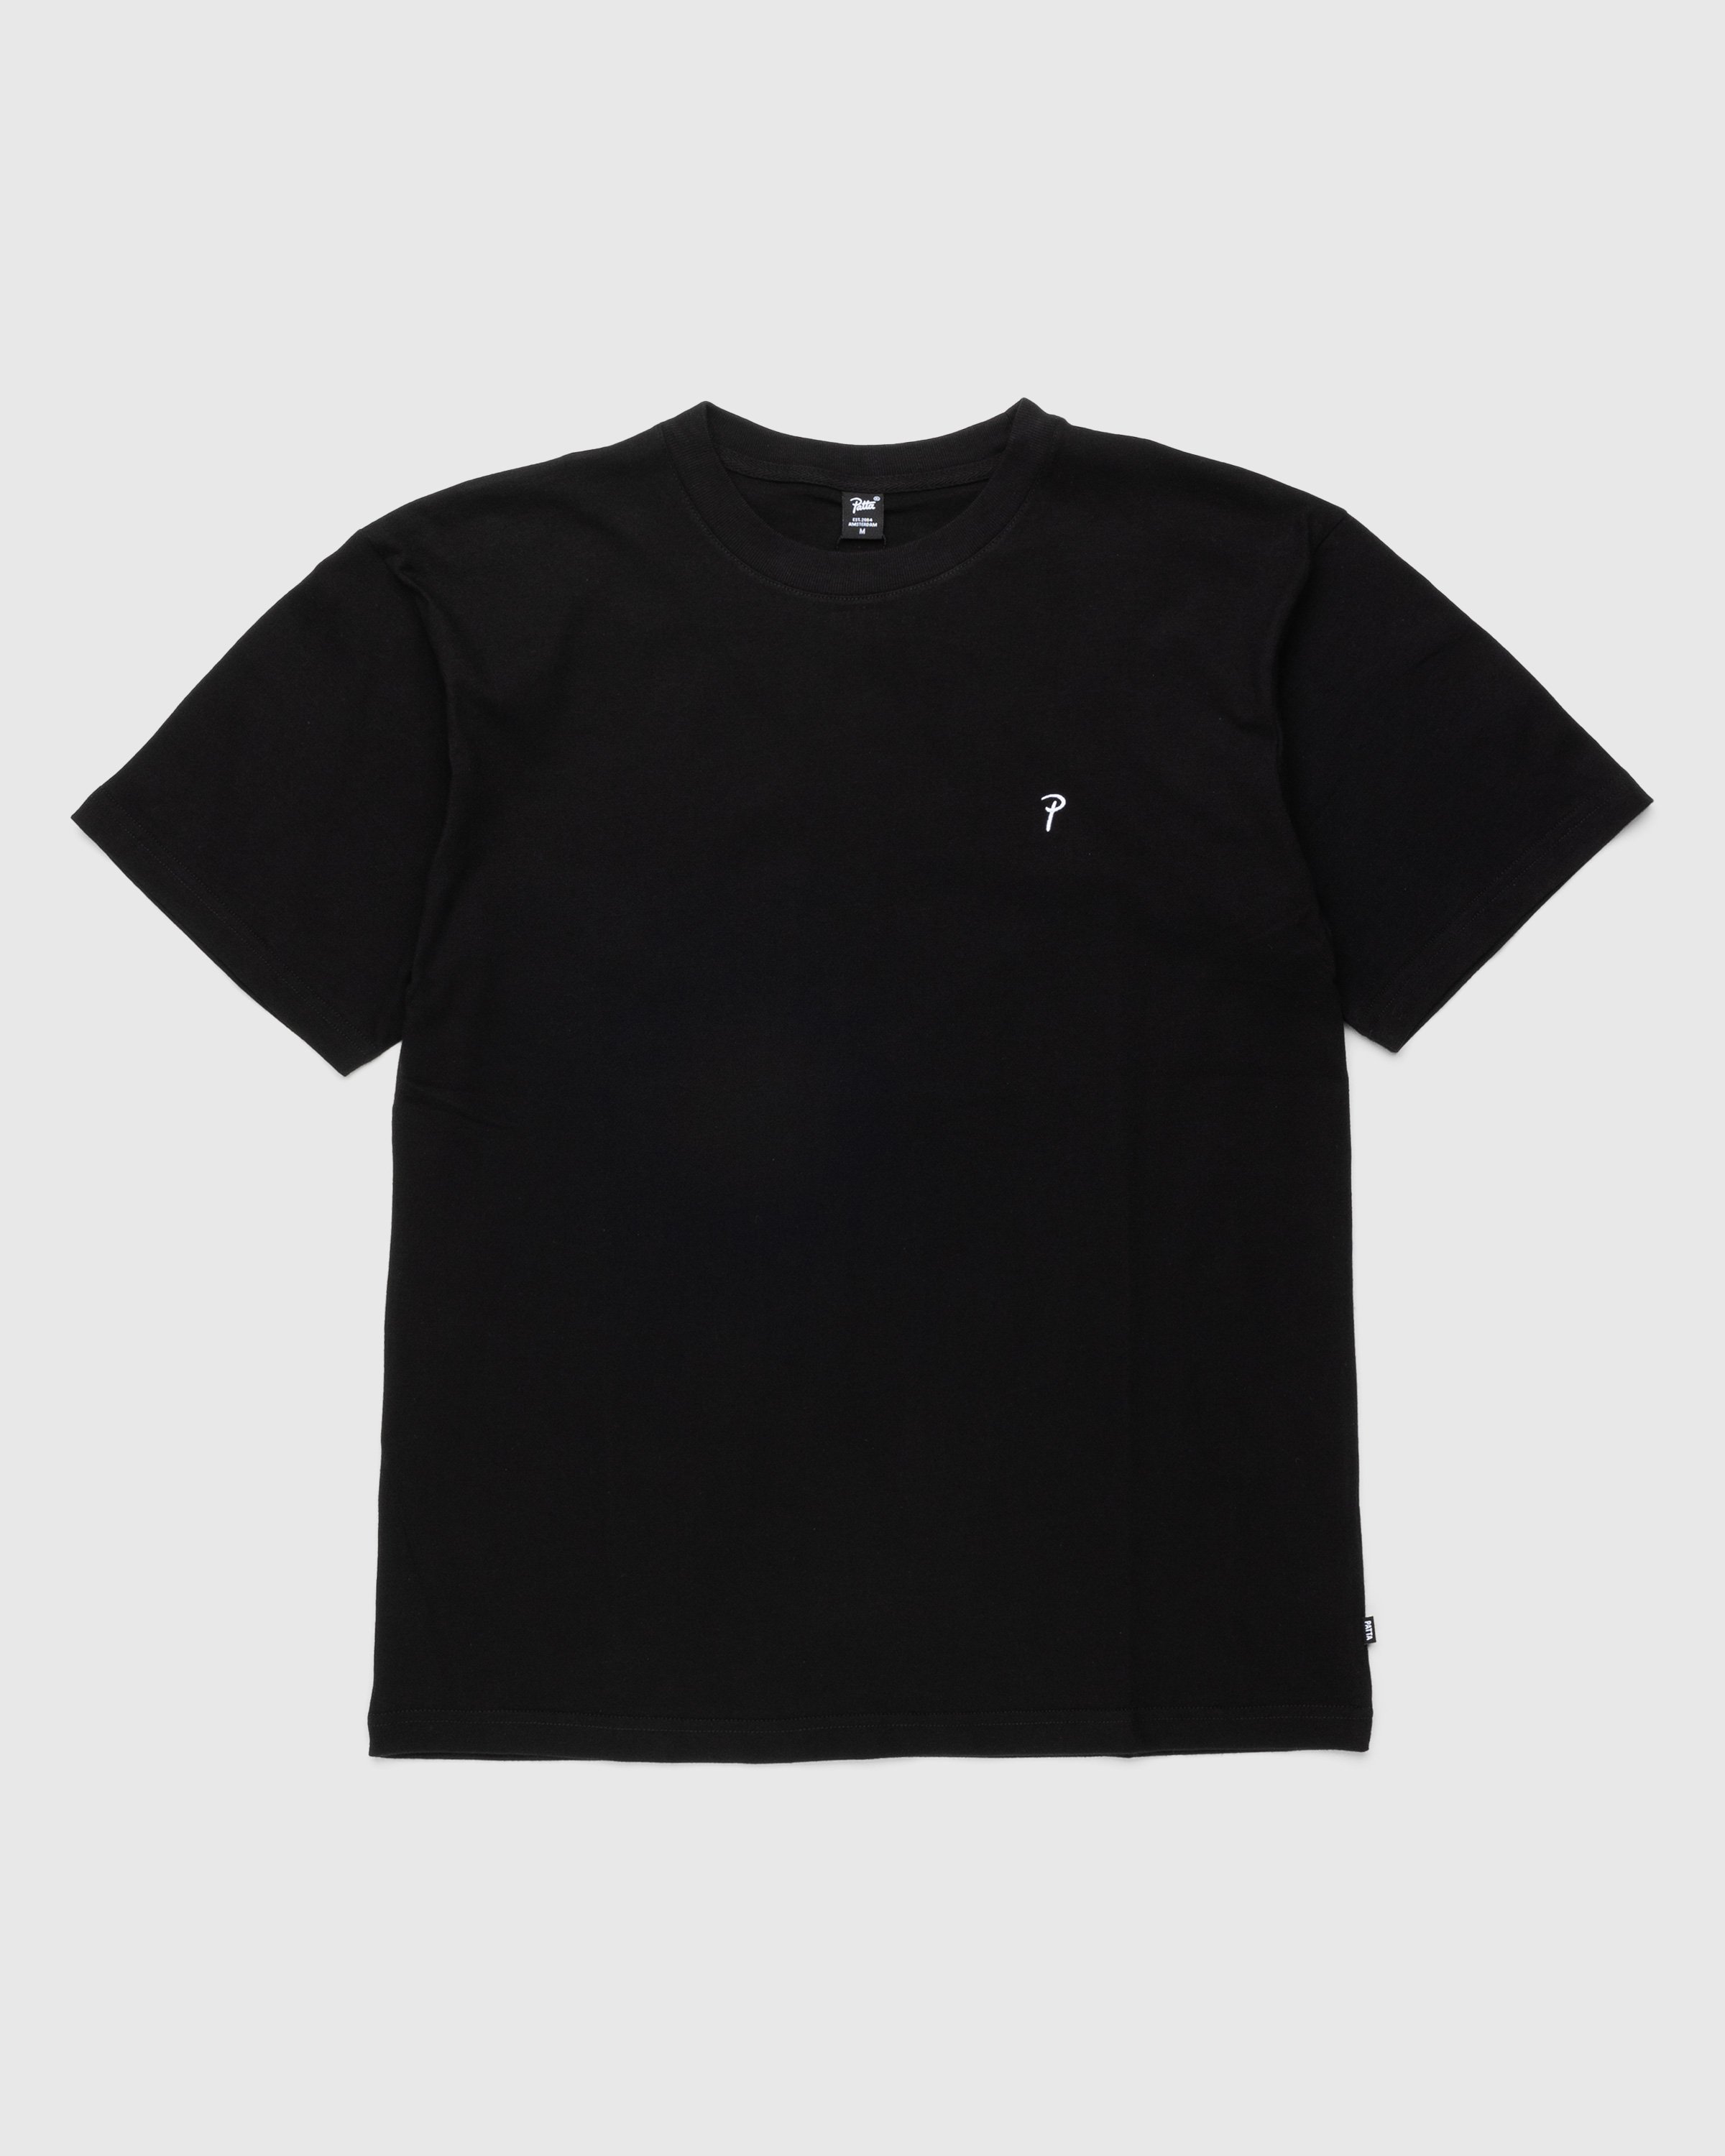 Patta - Basic Script P T-Shirt - Clothing - Black - Image 1